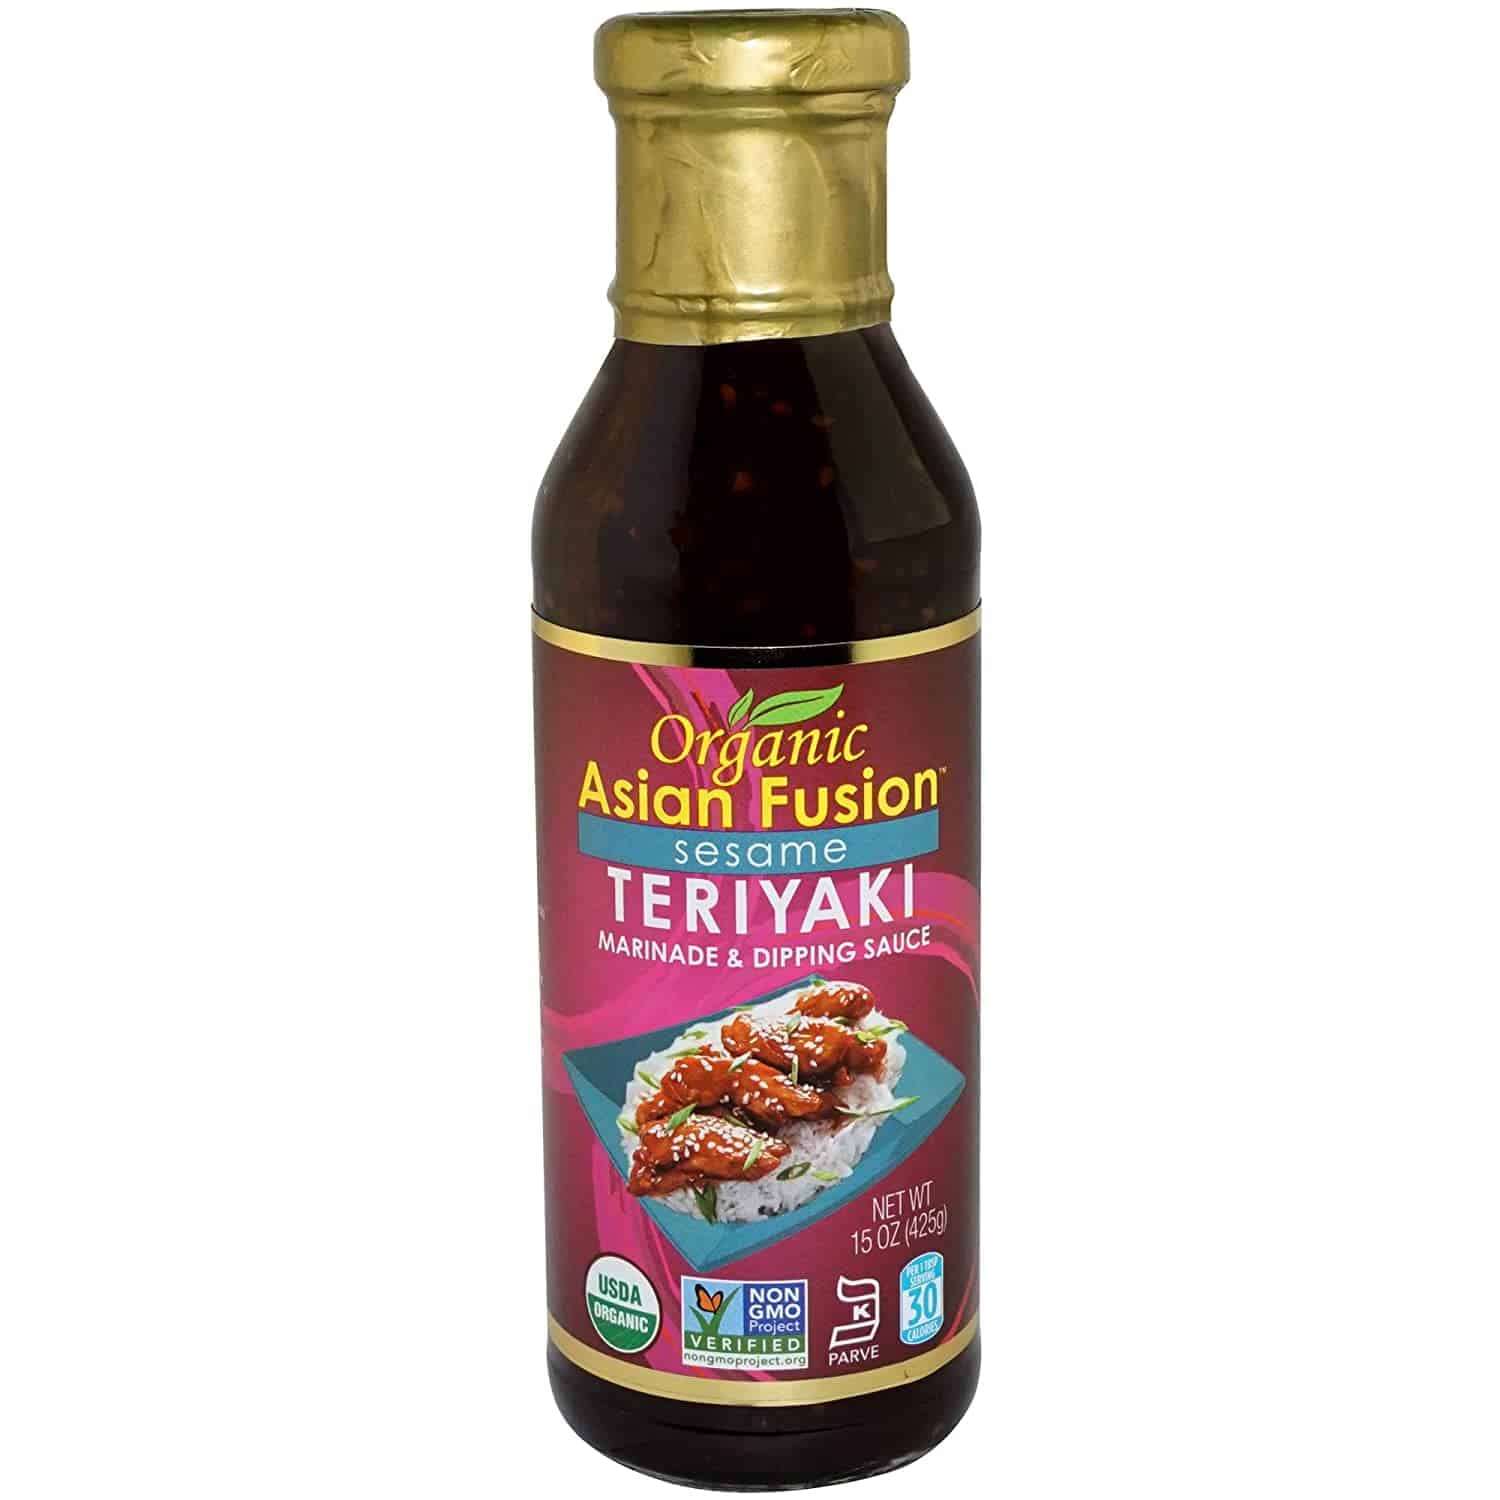 Organic Asian gluten-free teriyaki sauce